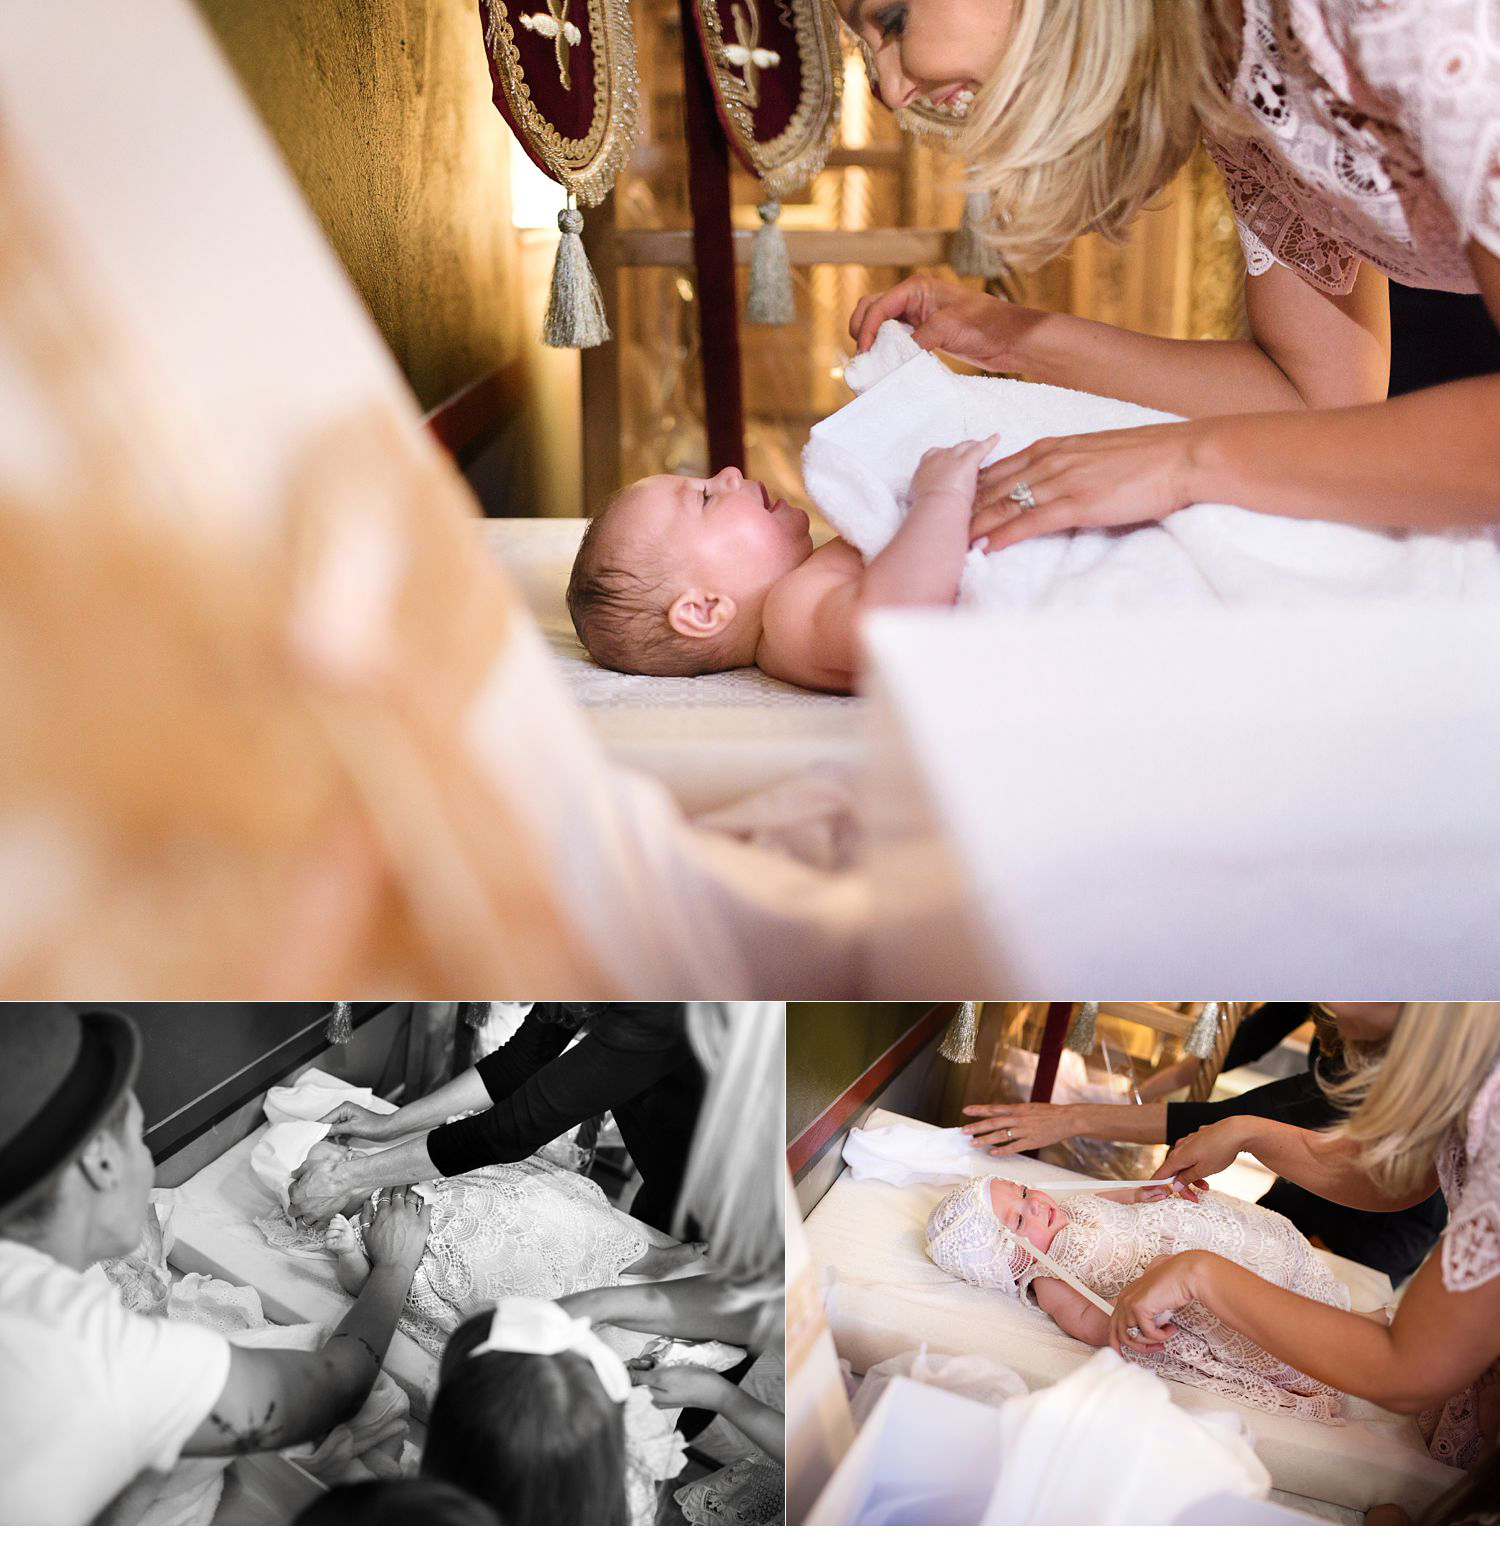 baby-natural-christening-baptism-photographer-melbourne-bec-stewart-lifestyle-photography-20.jpg